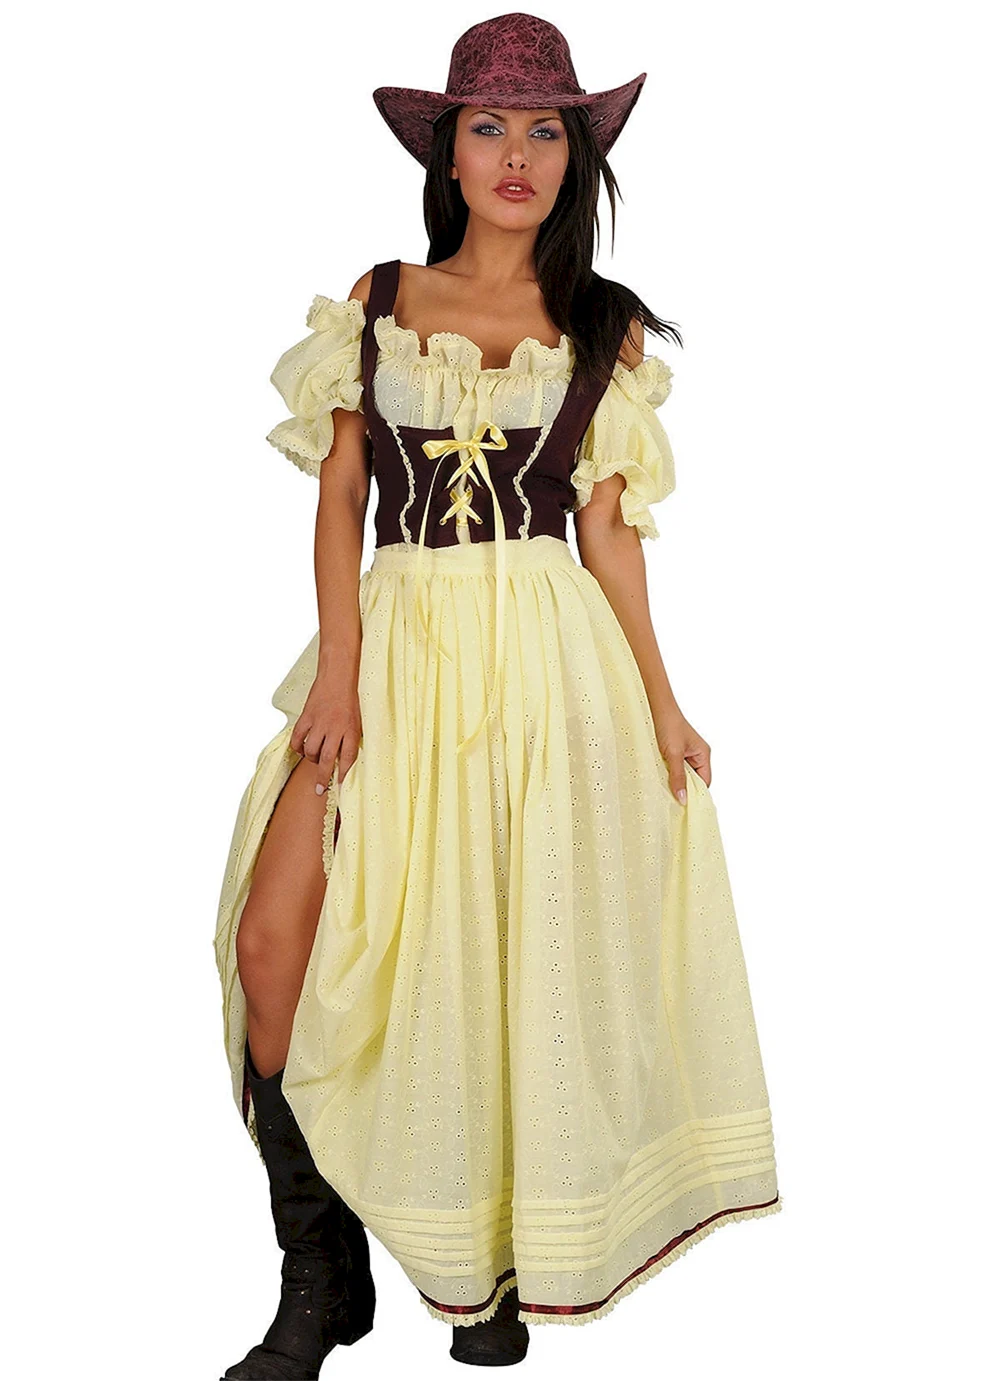 Wild West Saloon girl Costume